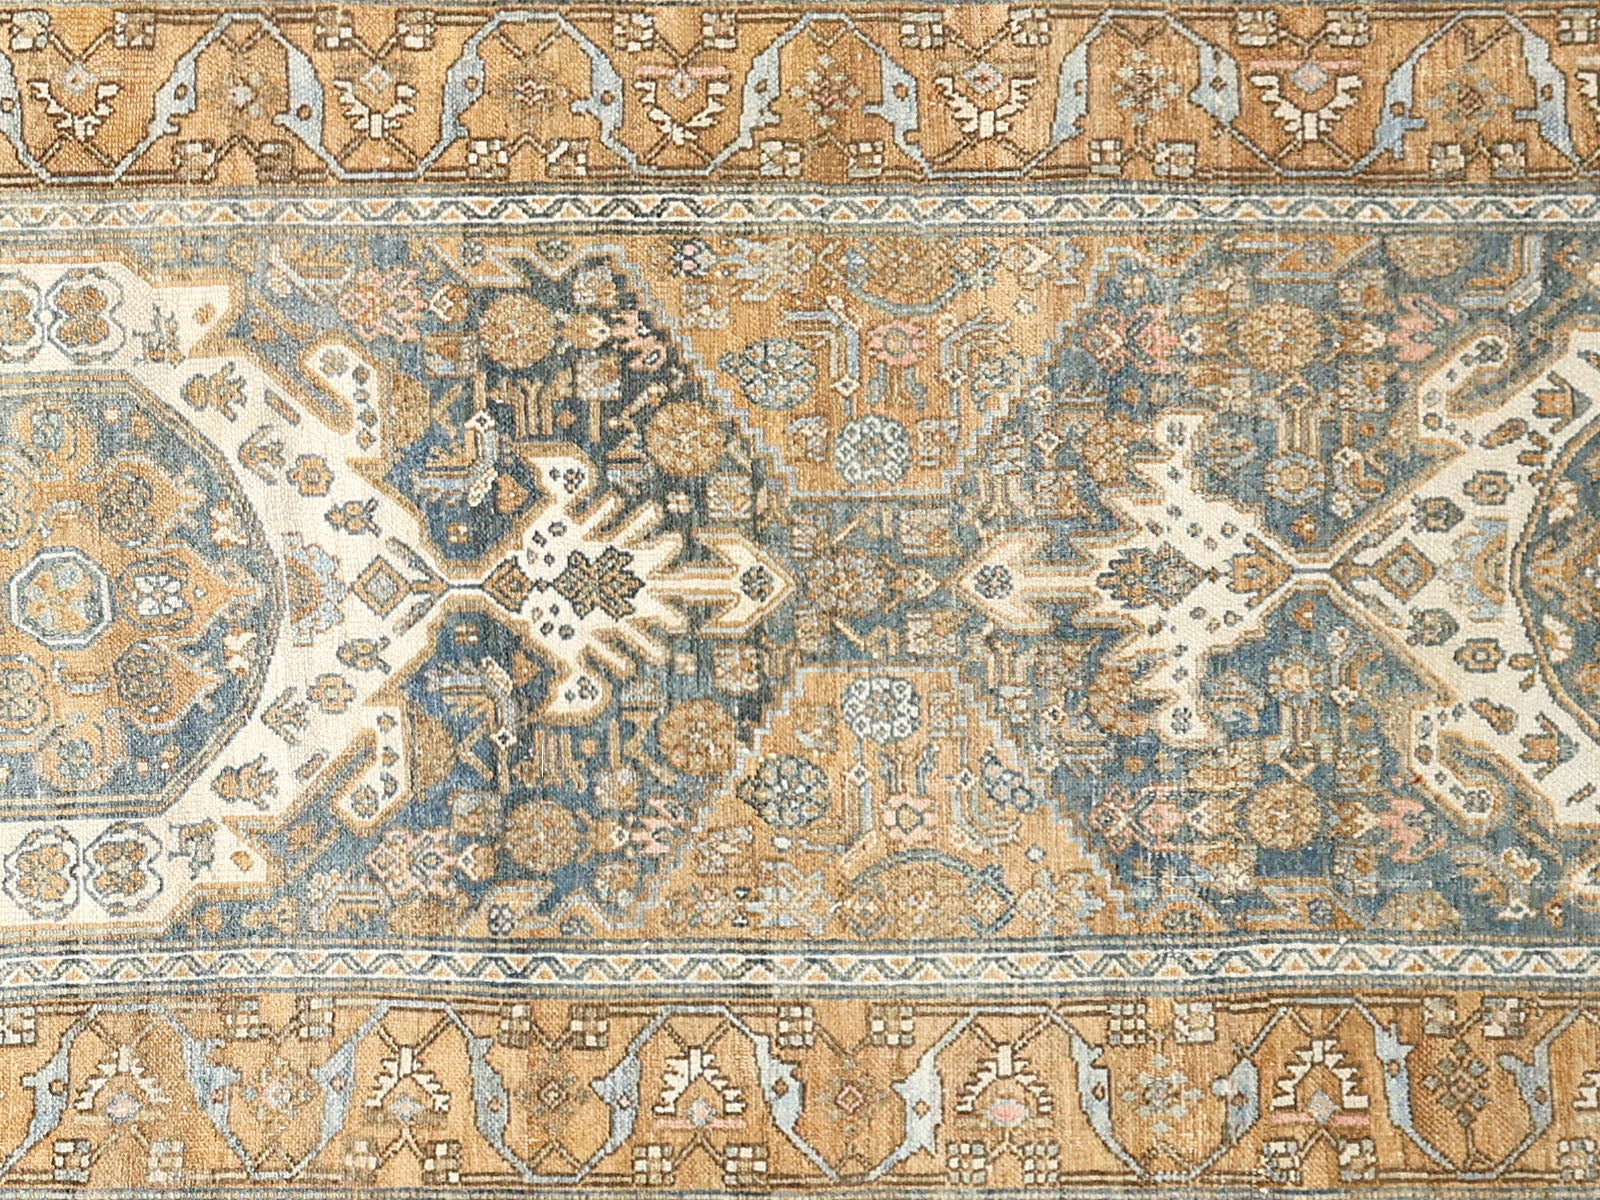 Semi Antique Persian Melayer Runner - 3'6" x 15'11"